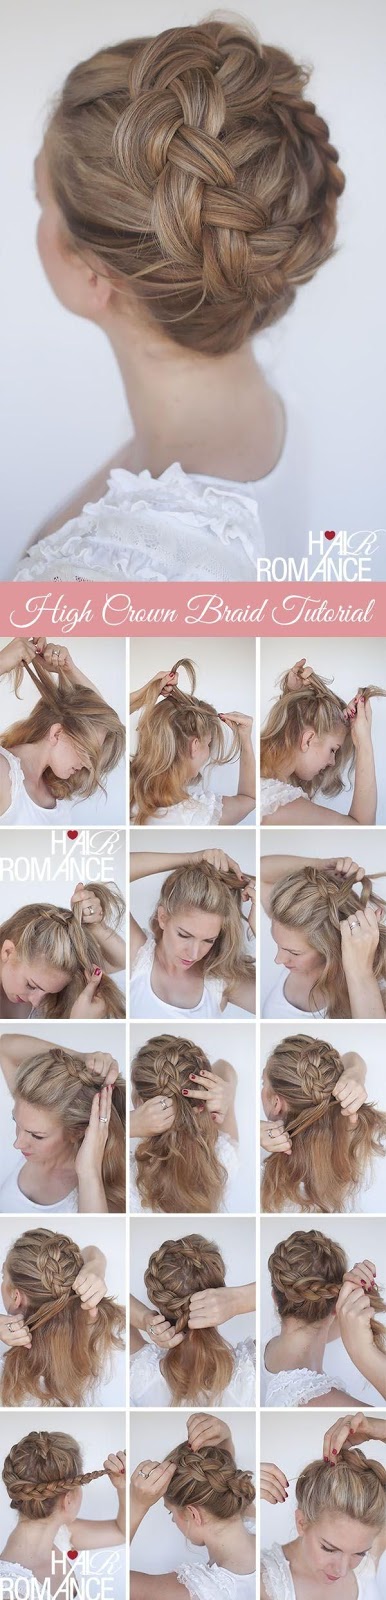 http://www.hairromance.com/2014/03/new-braid-tutorial-the-high-braided-crown-hairstyle.html